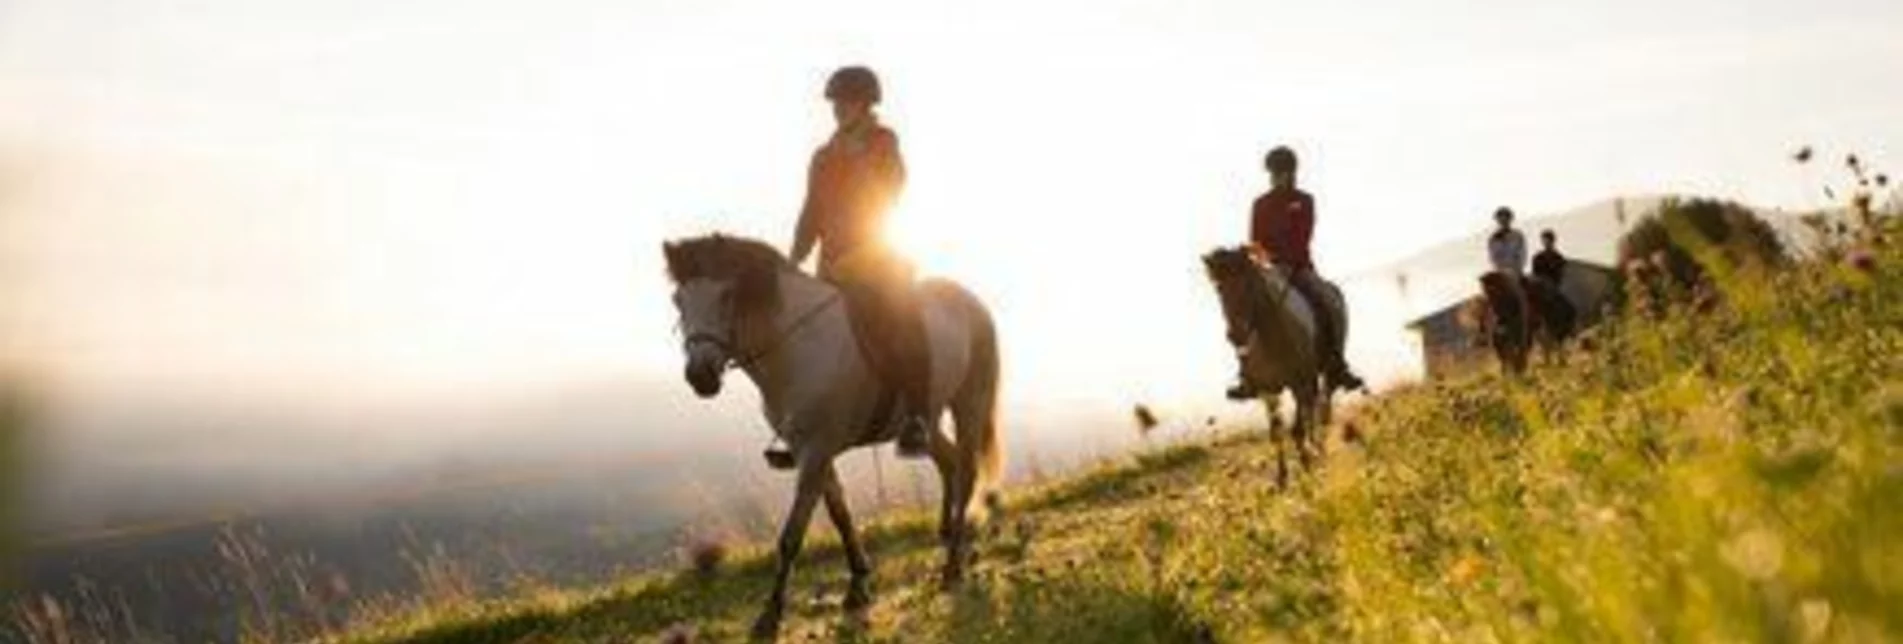 Horse Riding Seiterhof - Touren-Impression #1